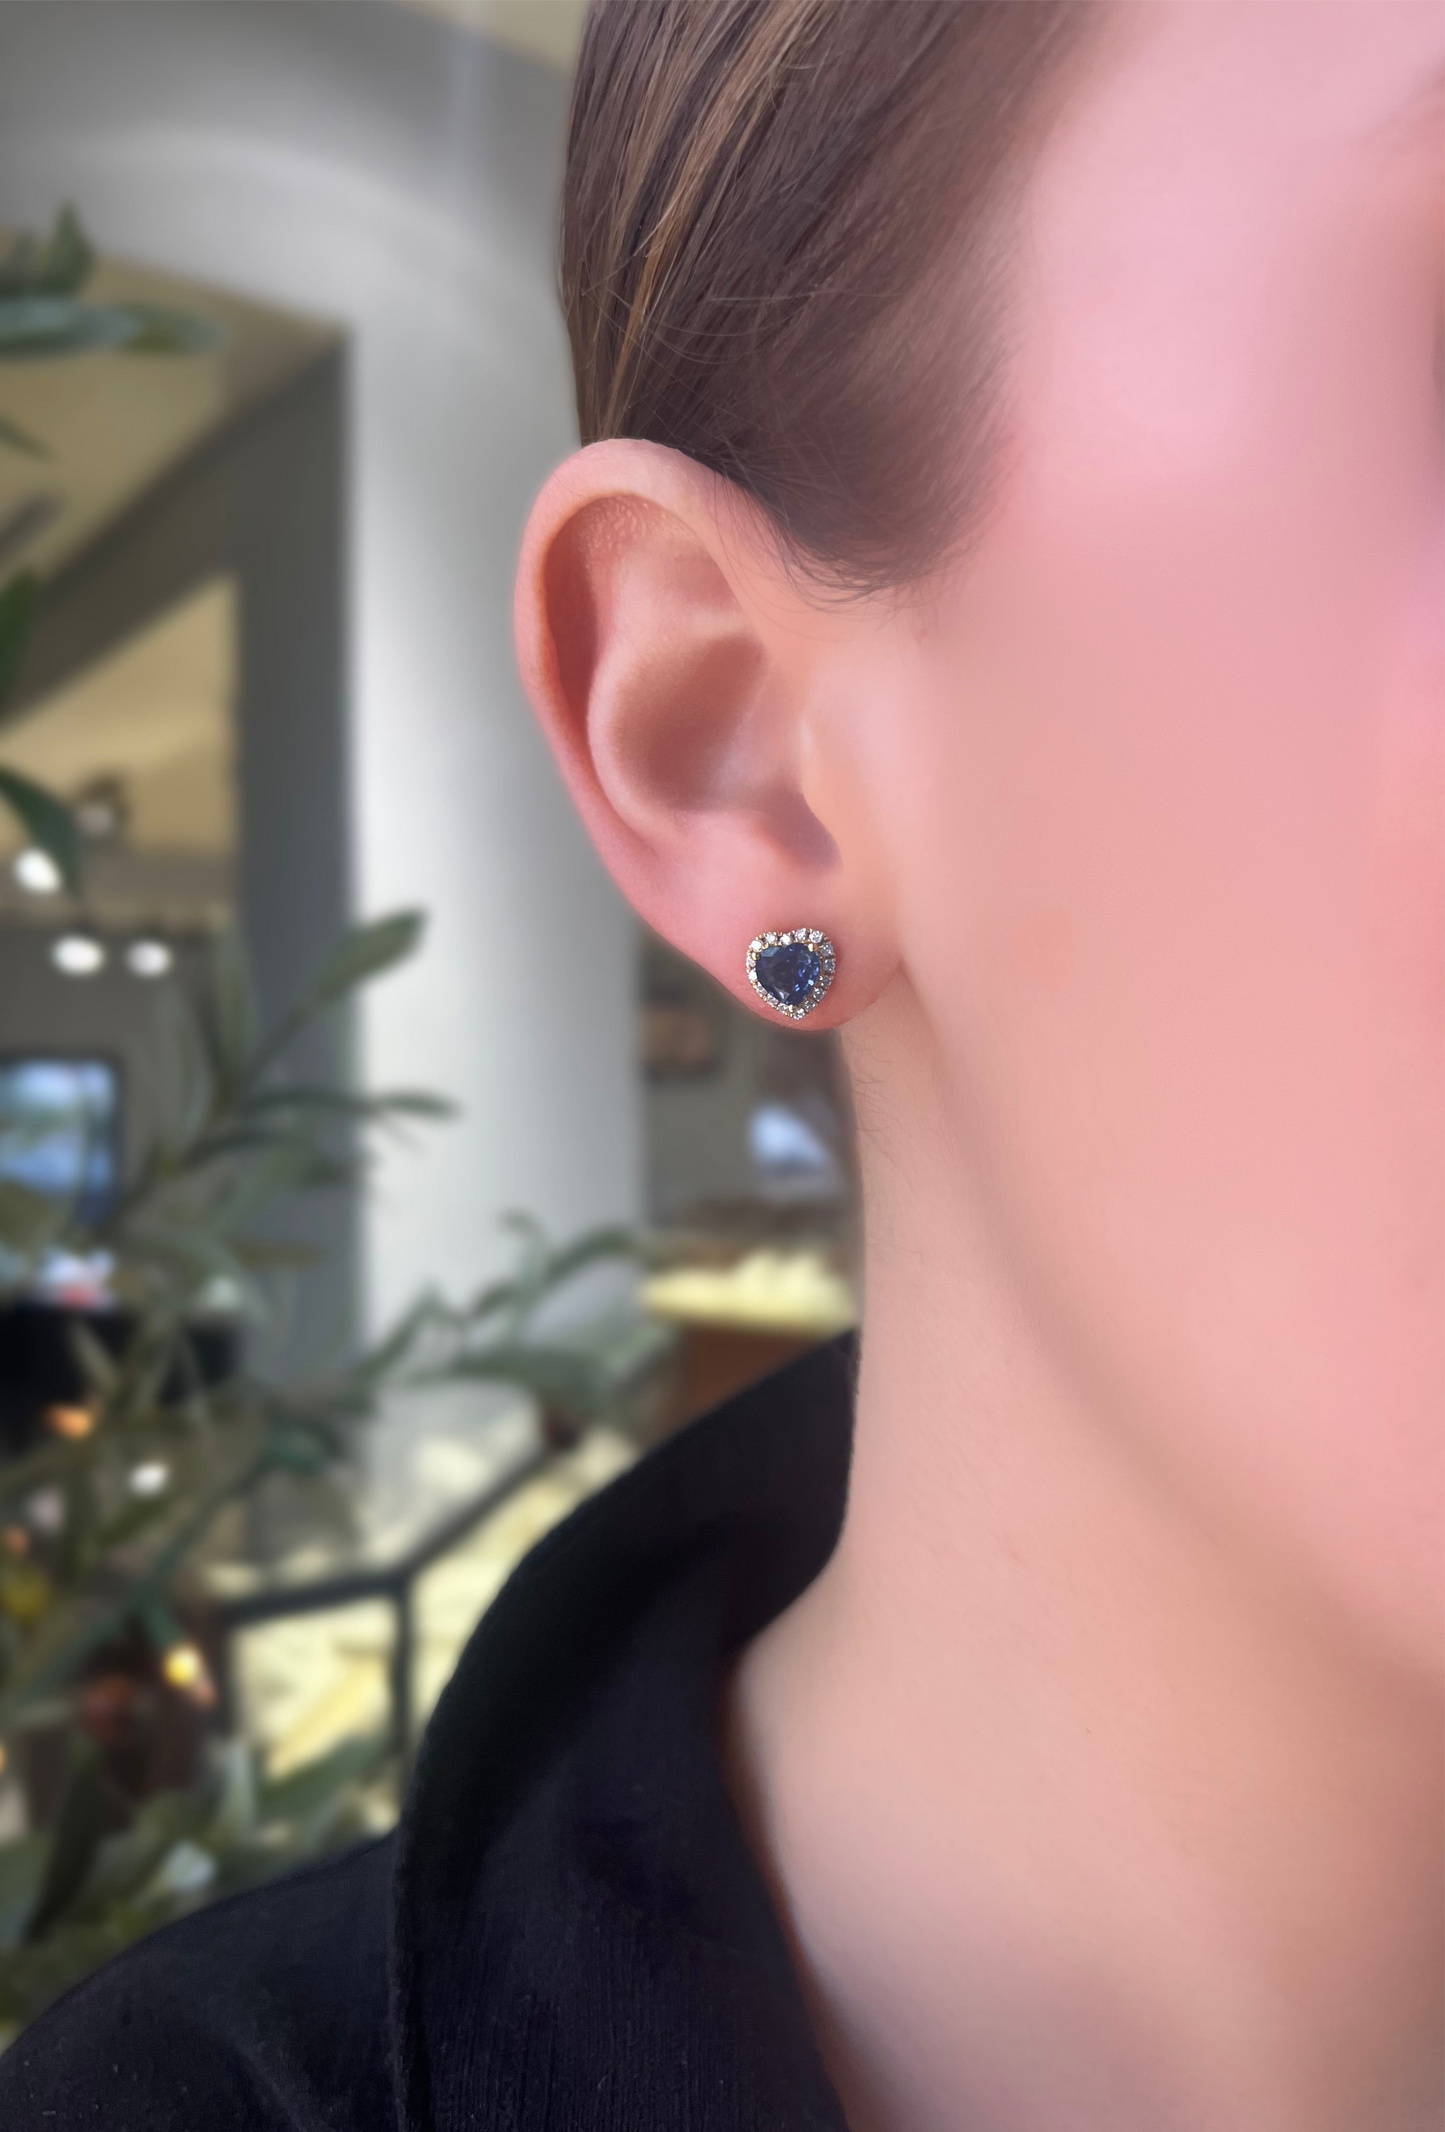 Sapphire and Diamond Heart Earrings